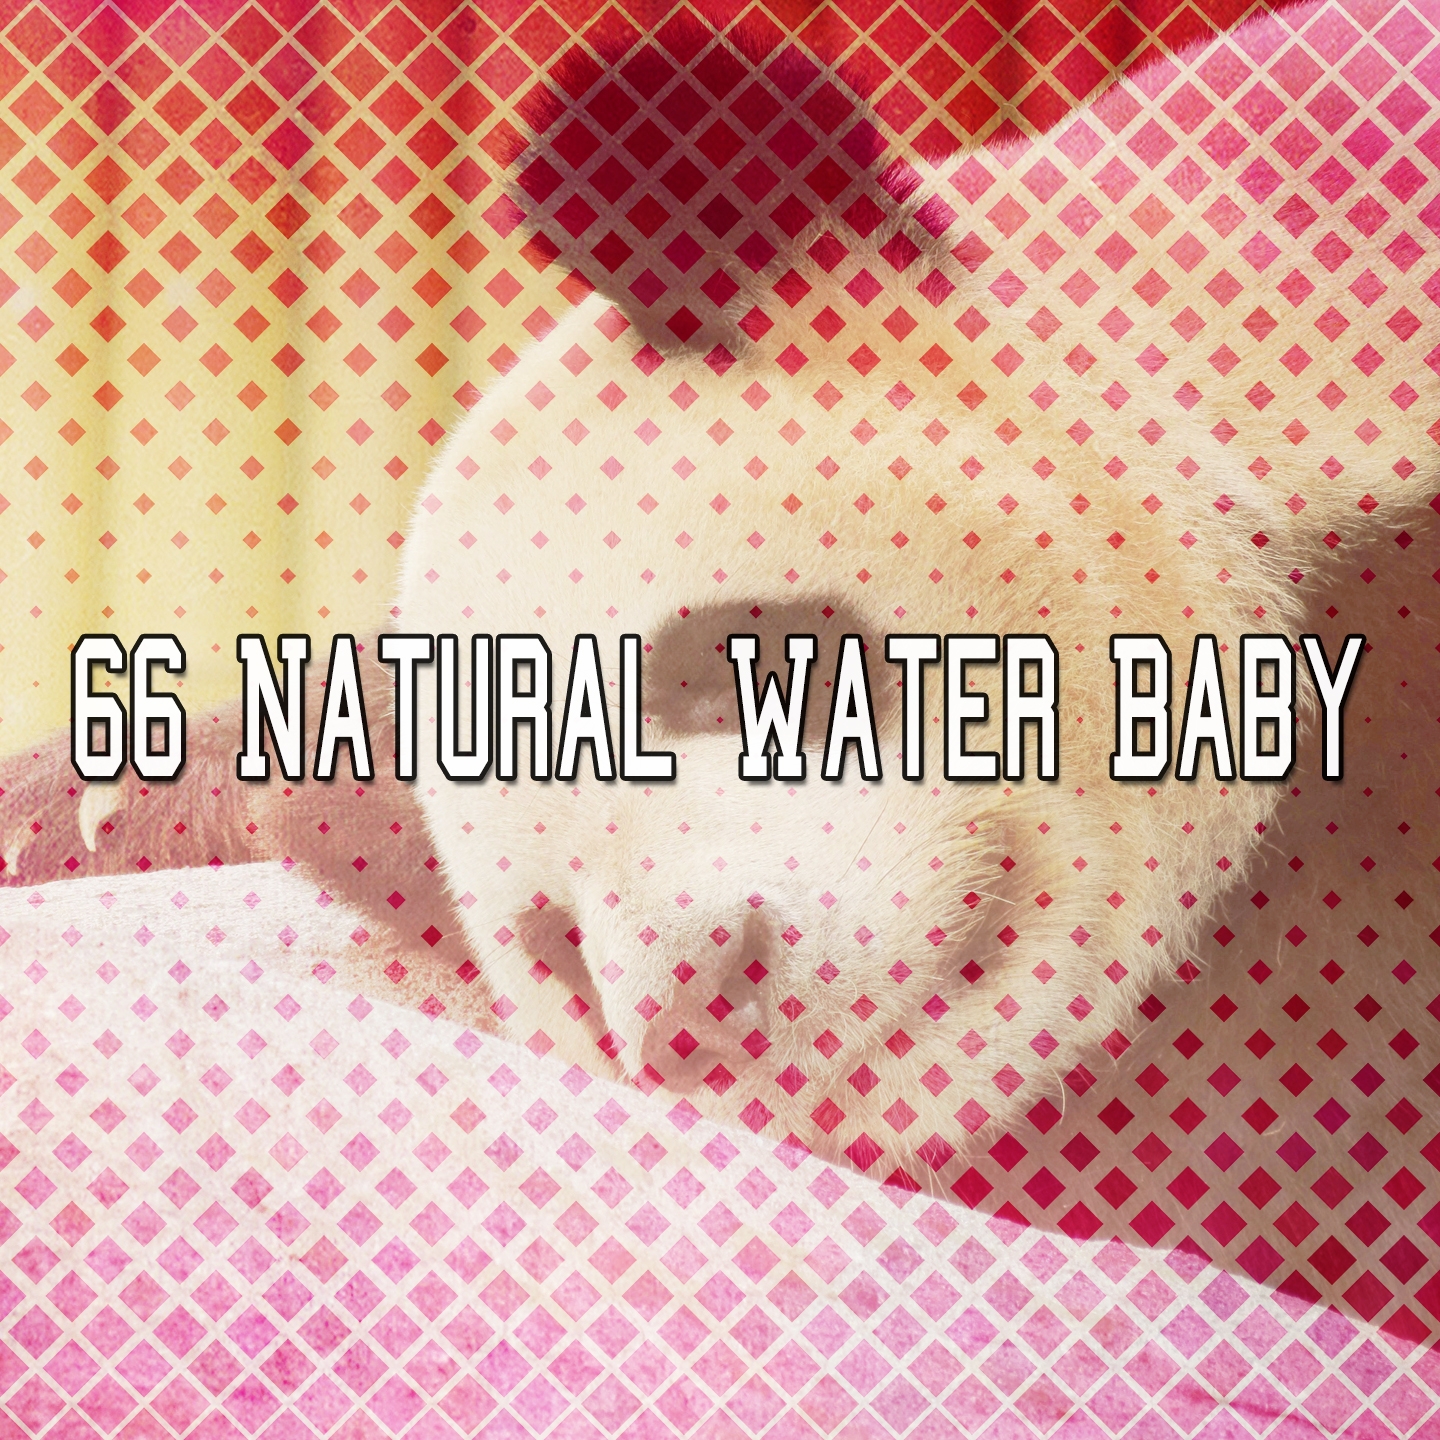 66 Natural Water Baby